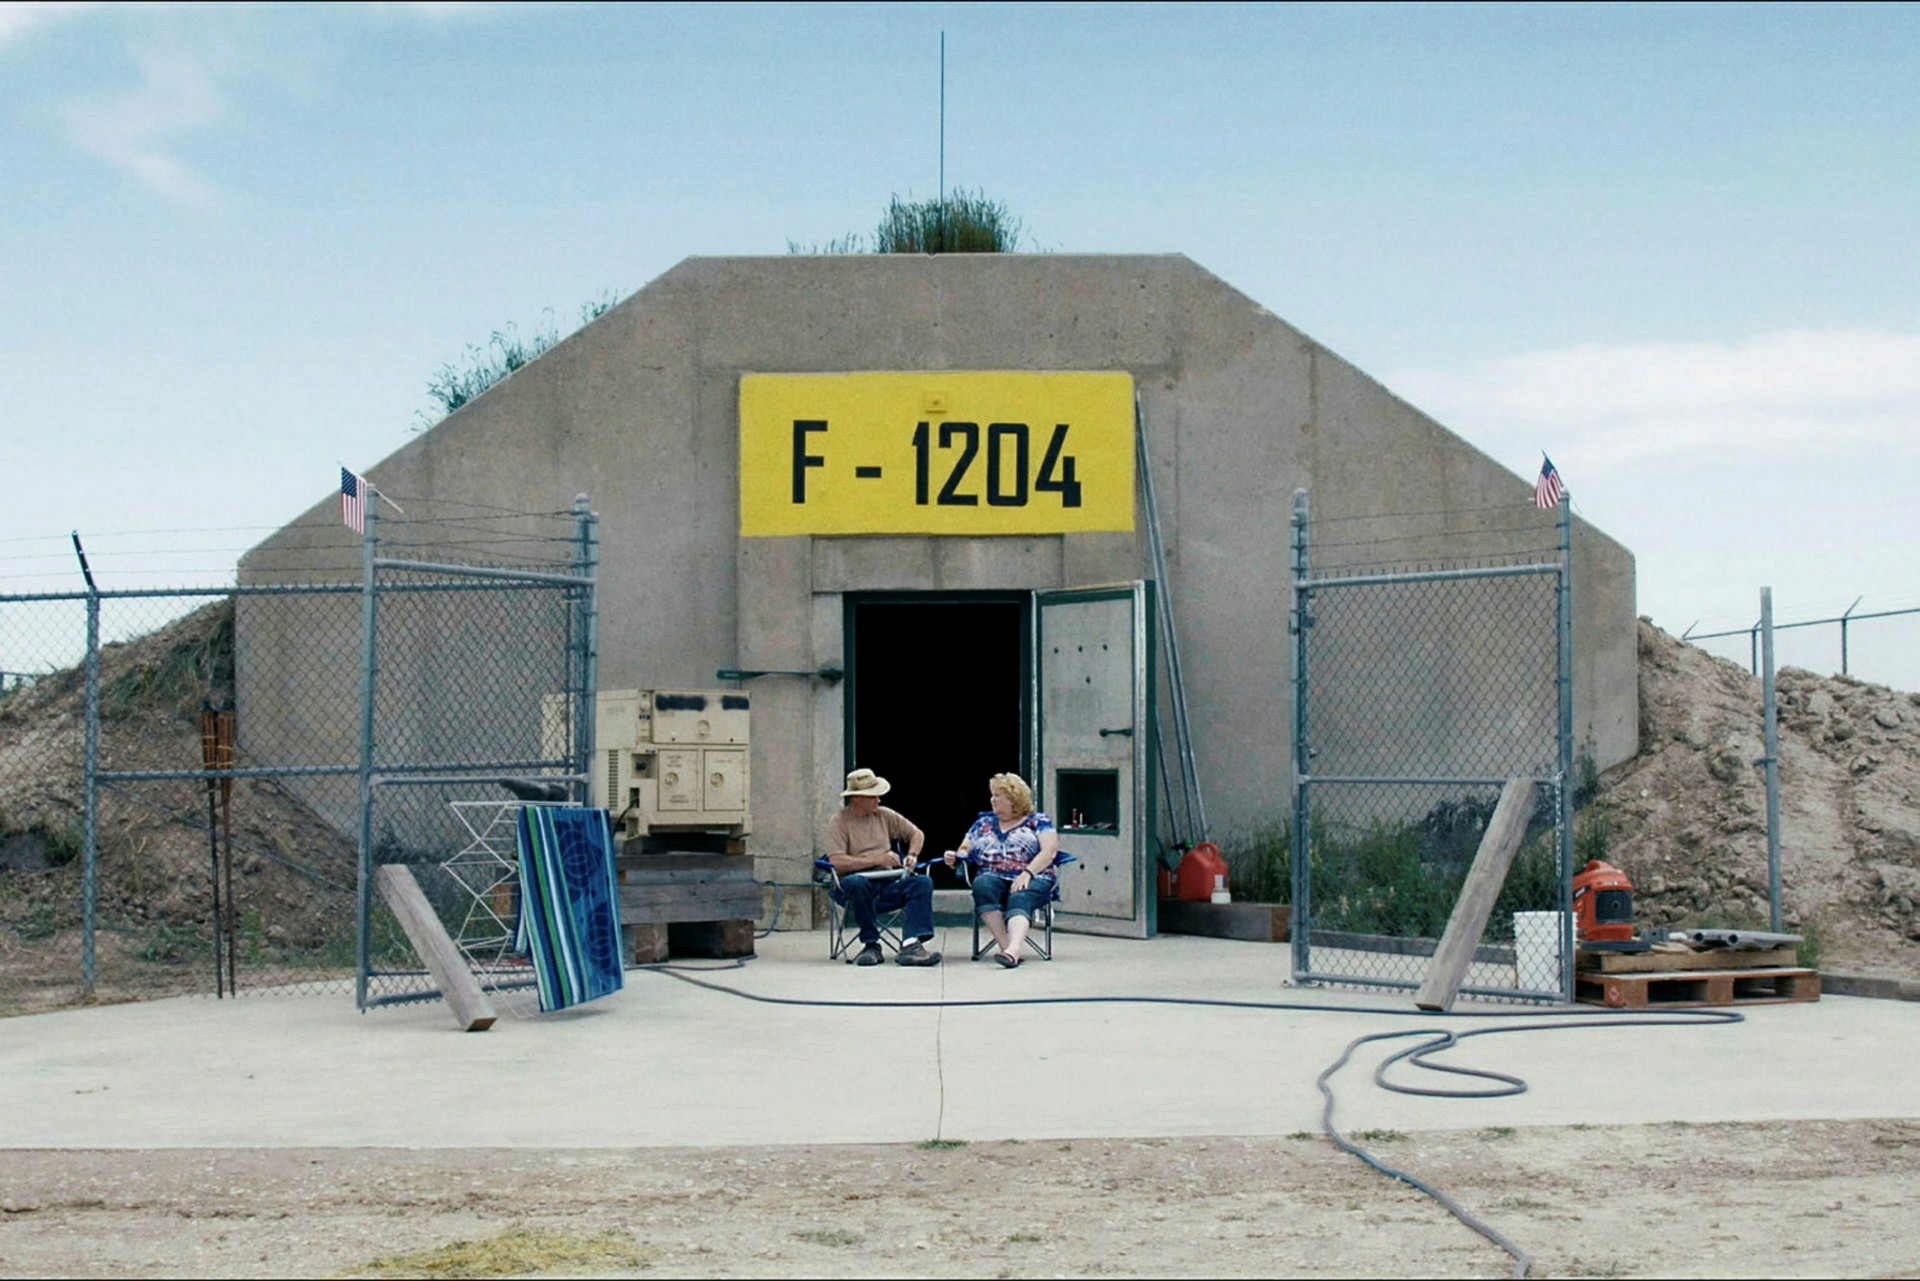 Leben im Bunker. (c) ZDF/SRF, ican films gmbh